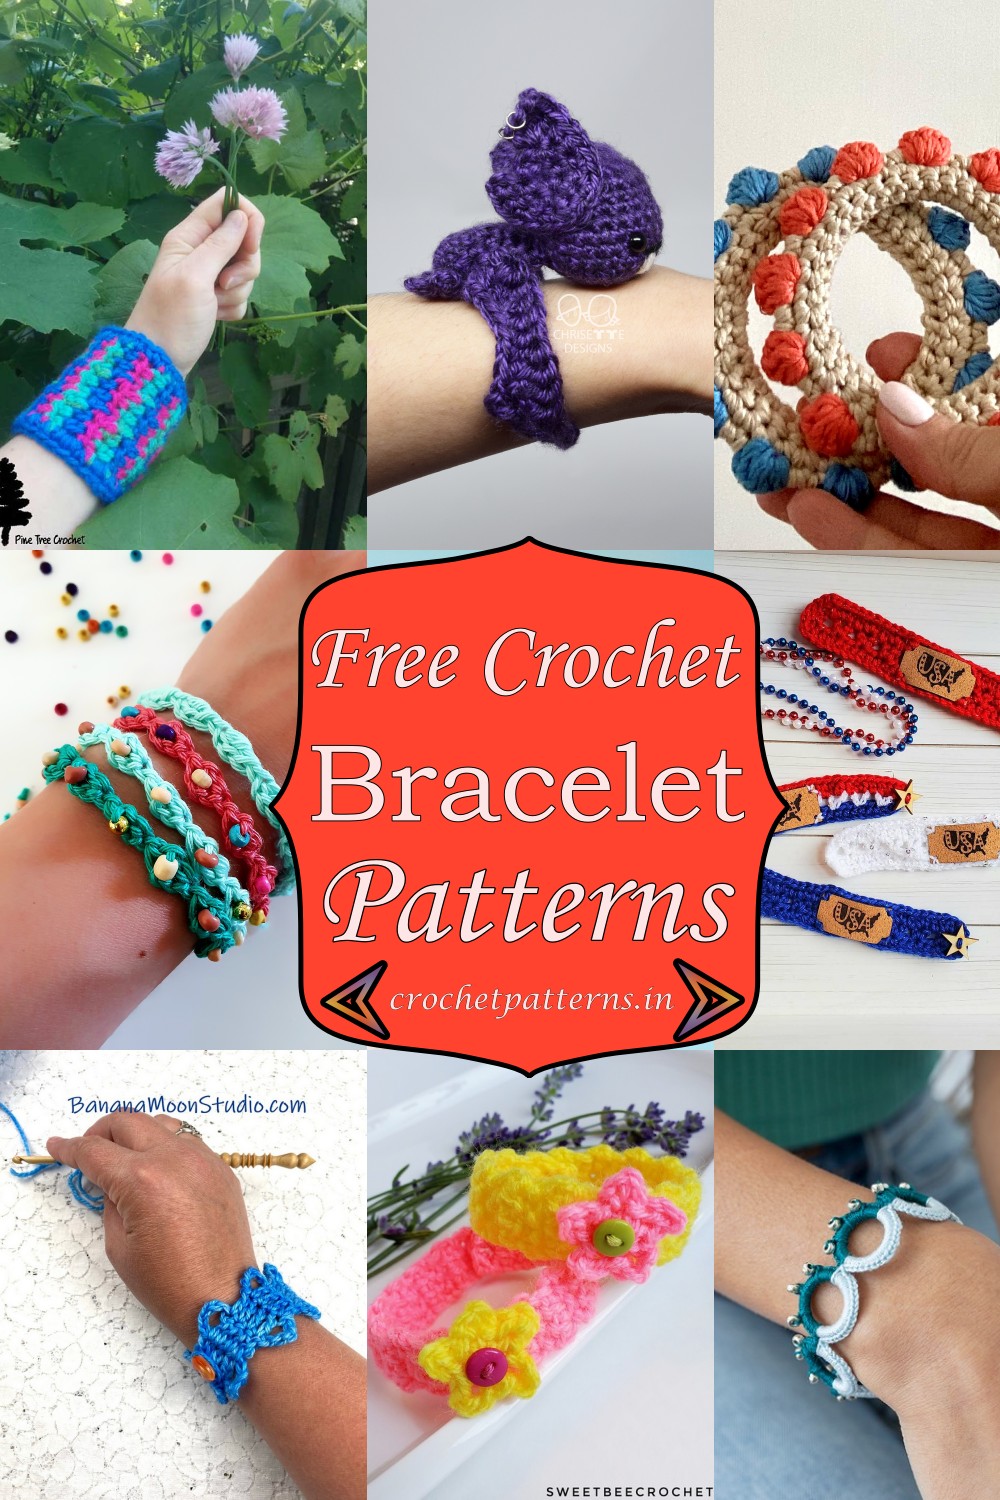 Free Crochet Bracelet Patterns